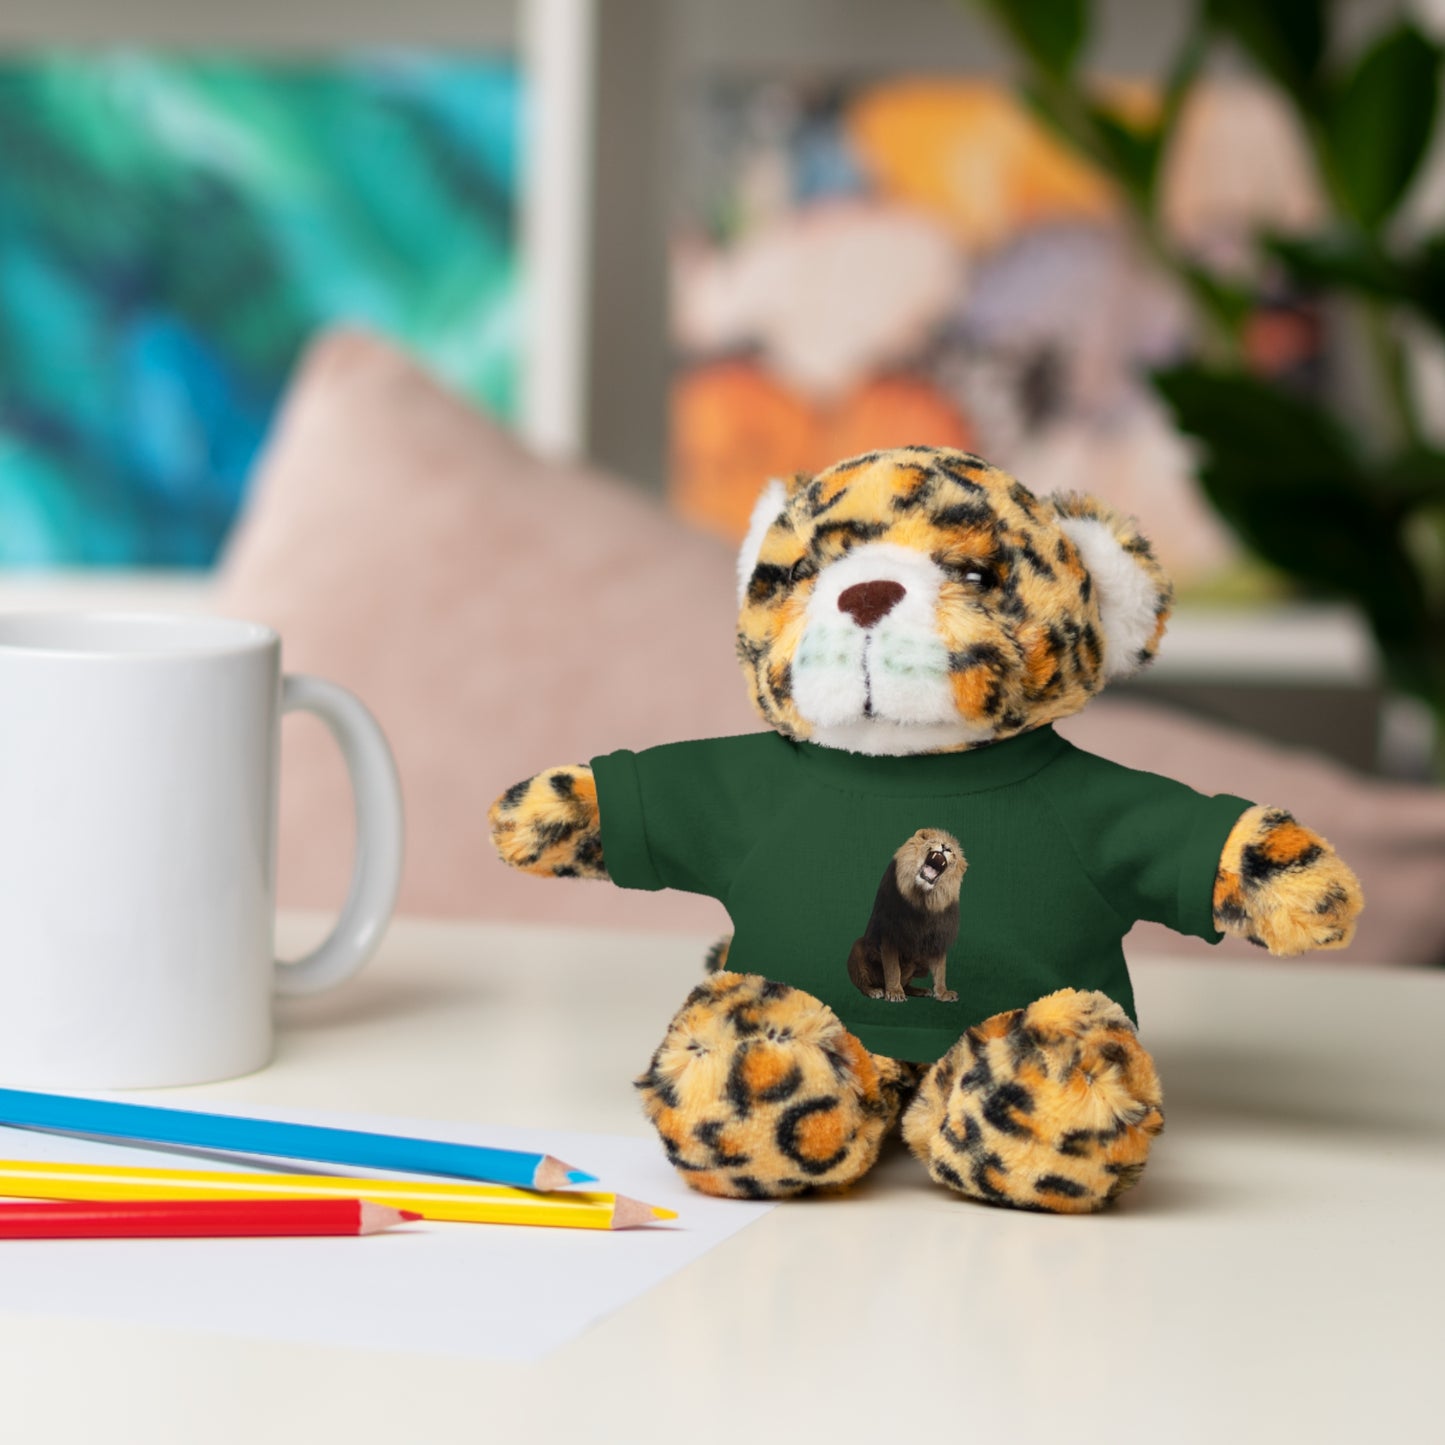 Lion Roar Stuffed Animal Plushie Toy